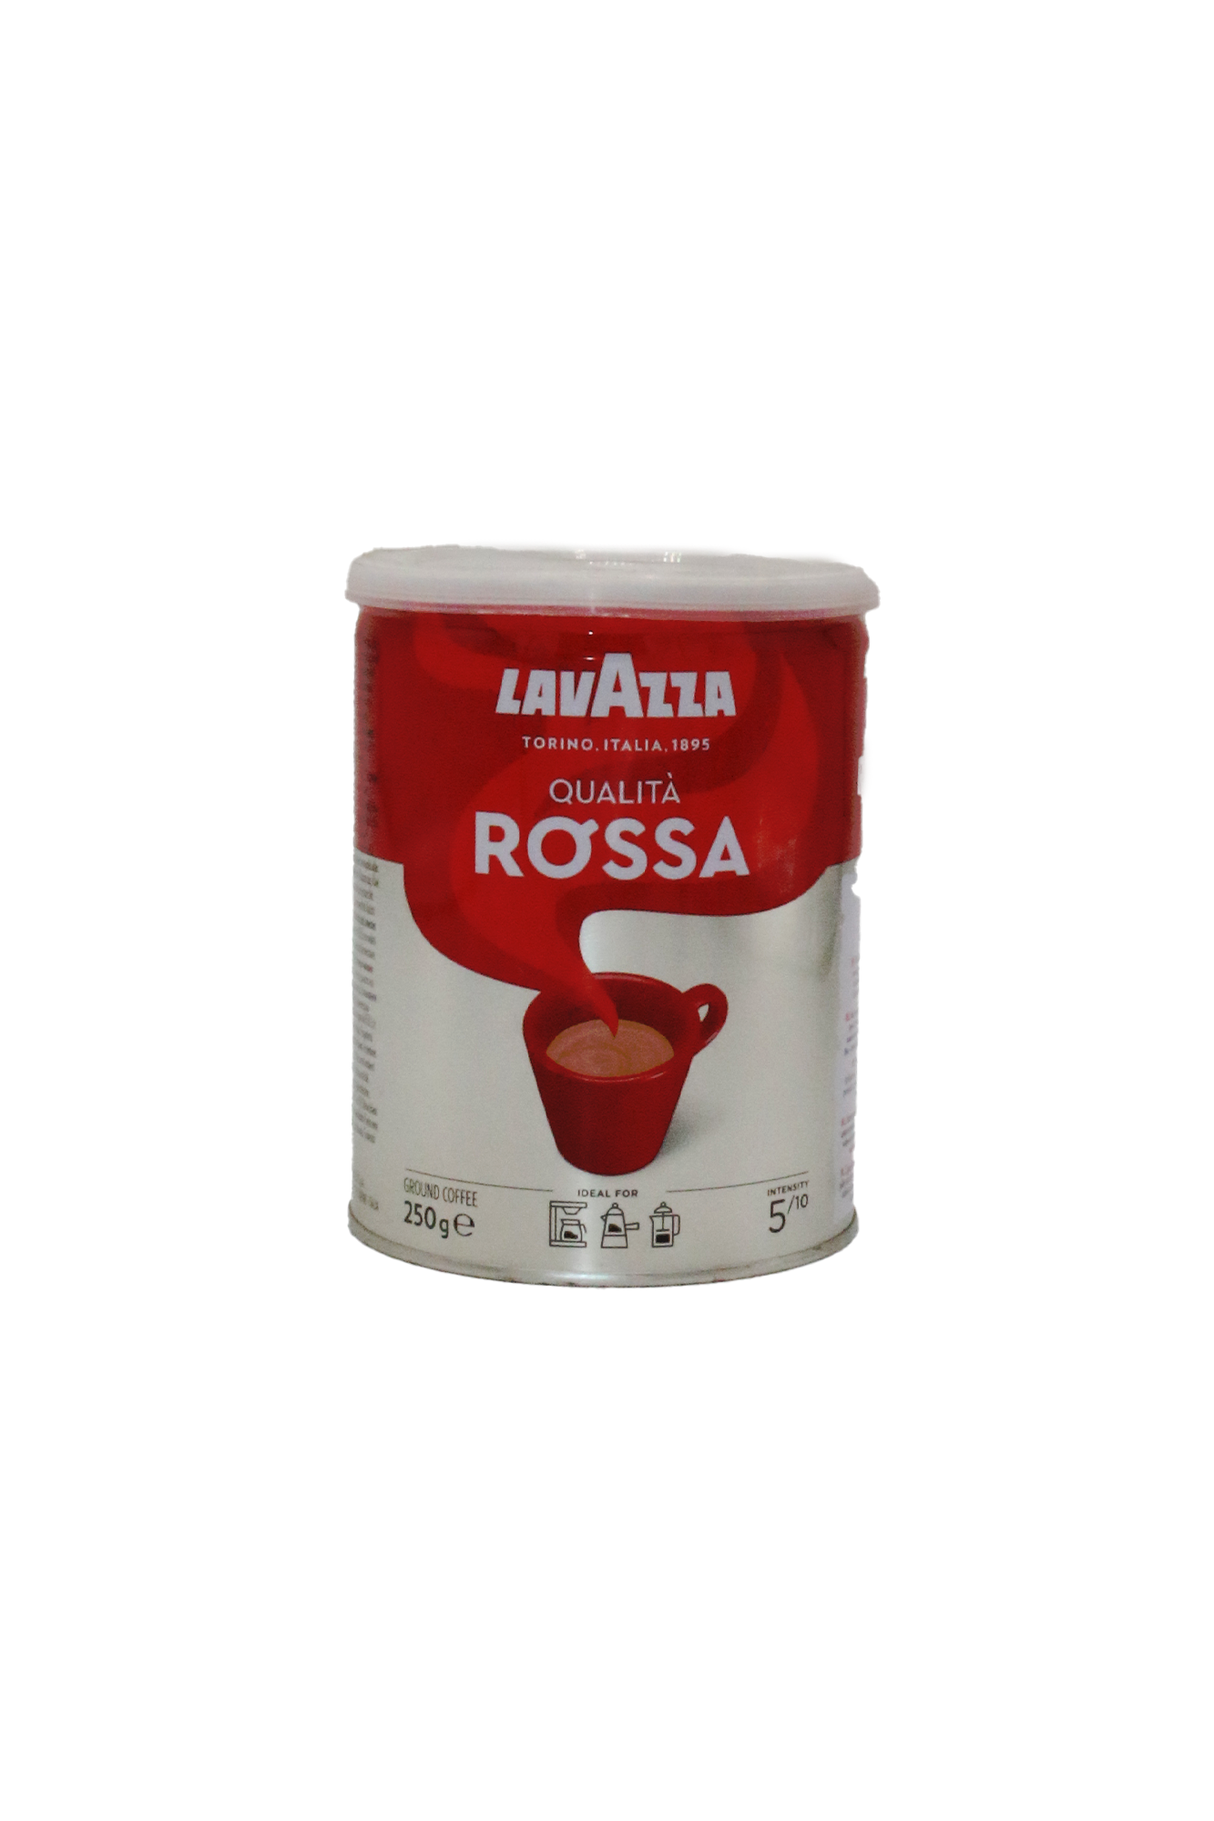 lavazza coffee rossa tin 250g tin